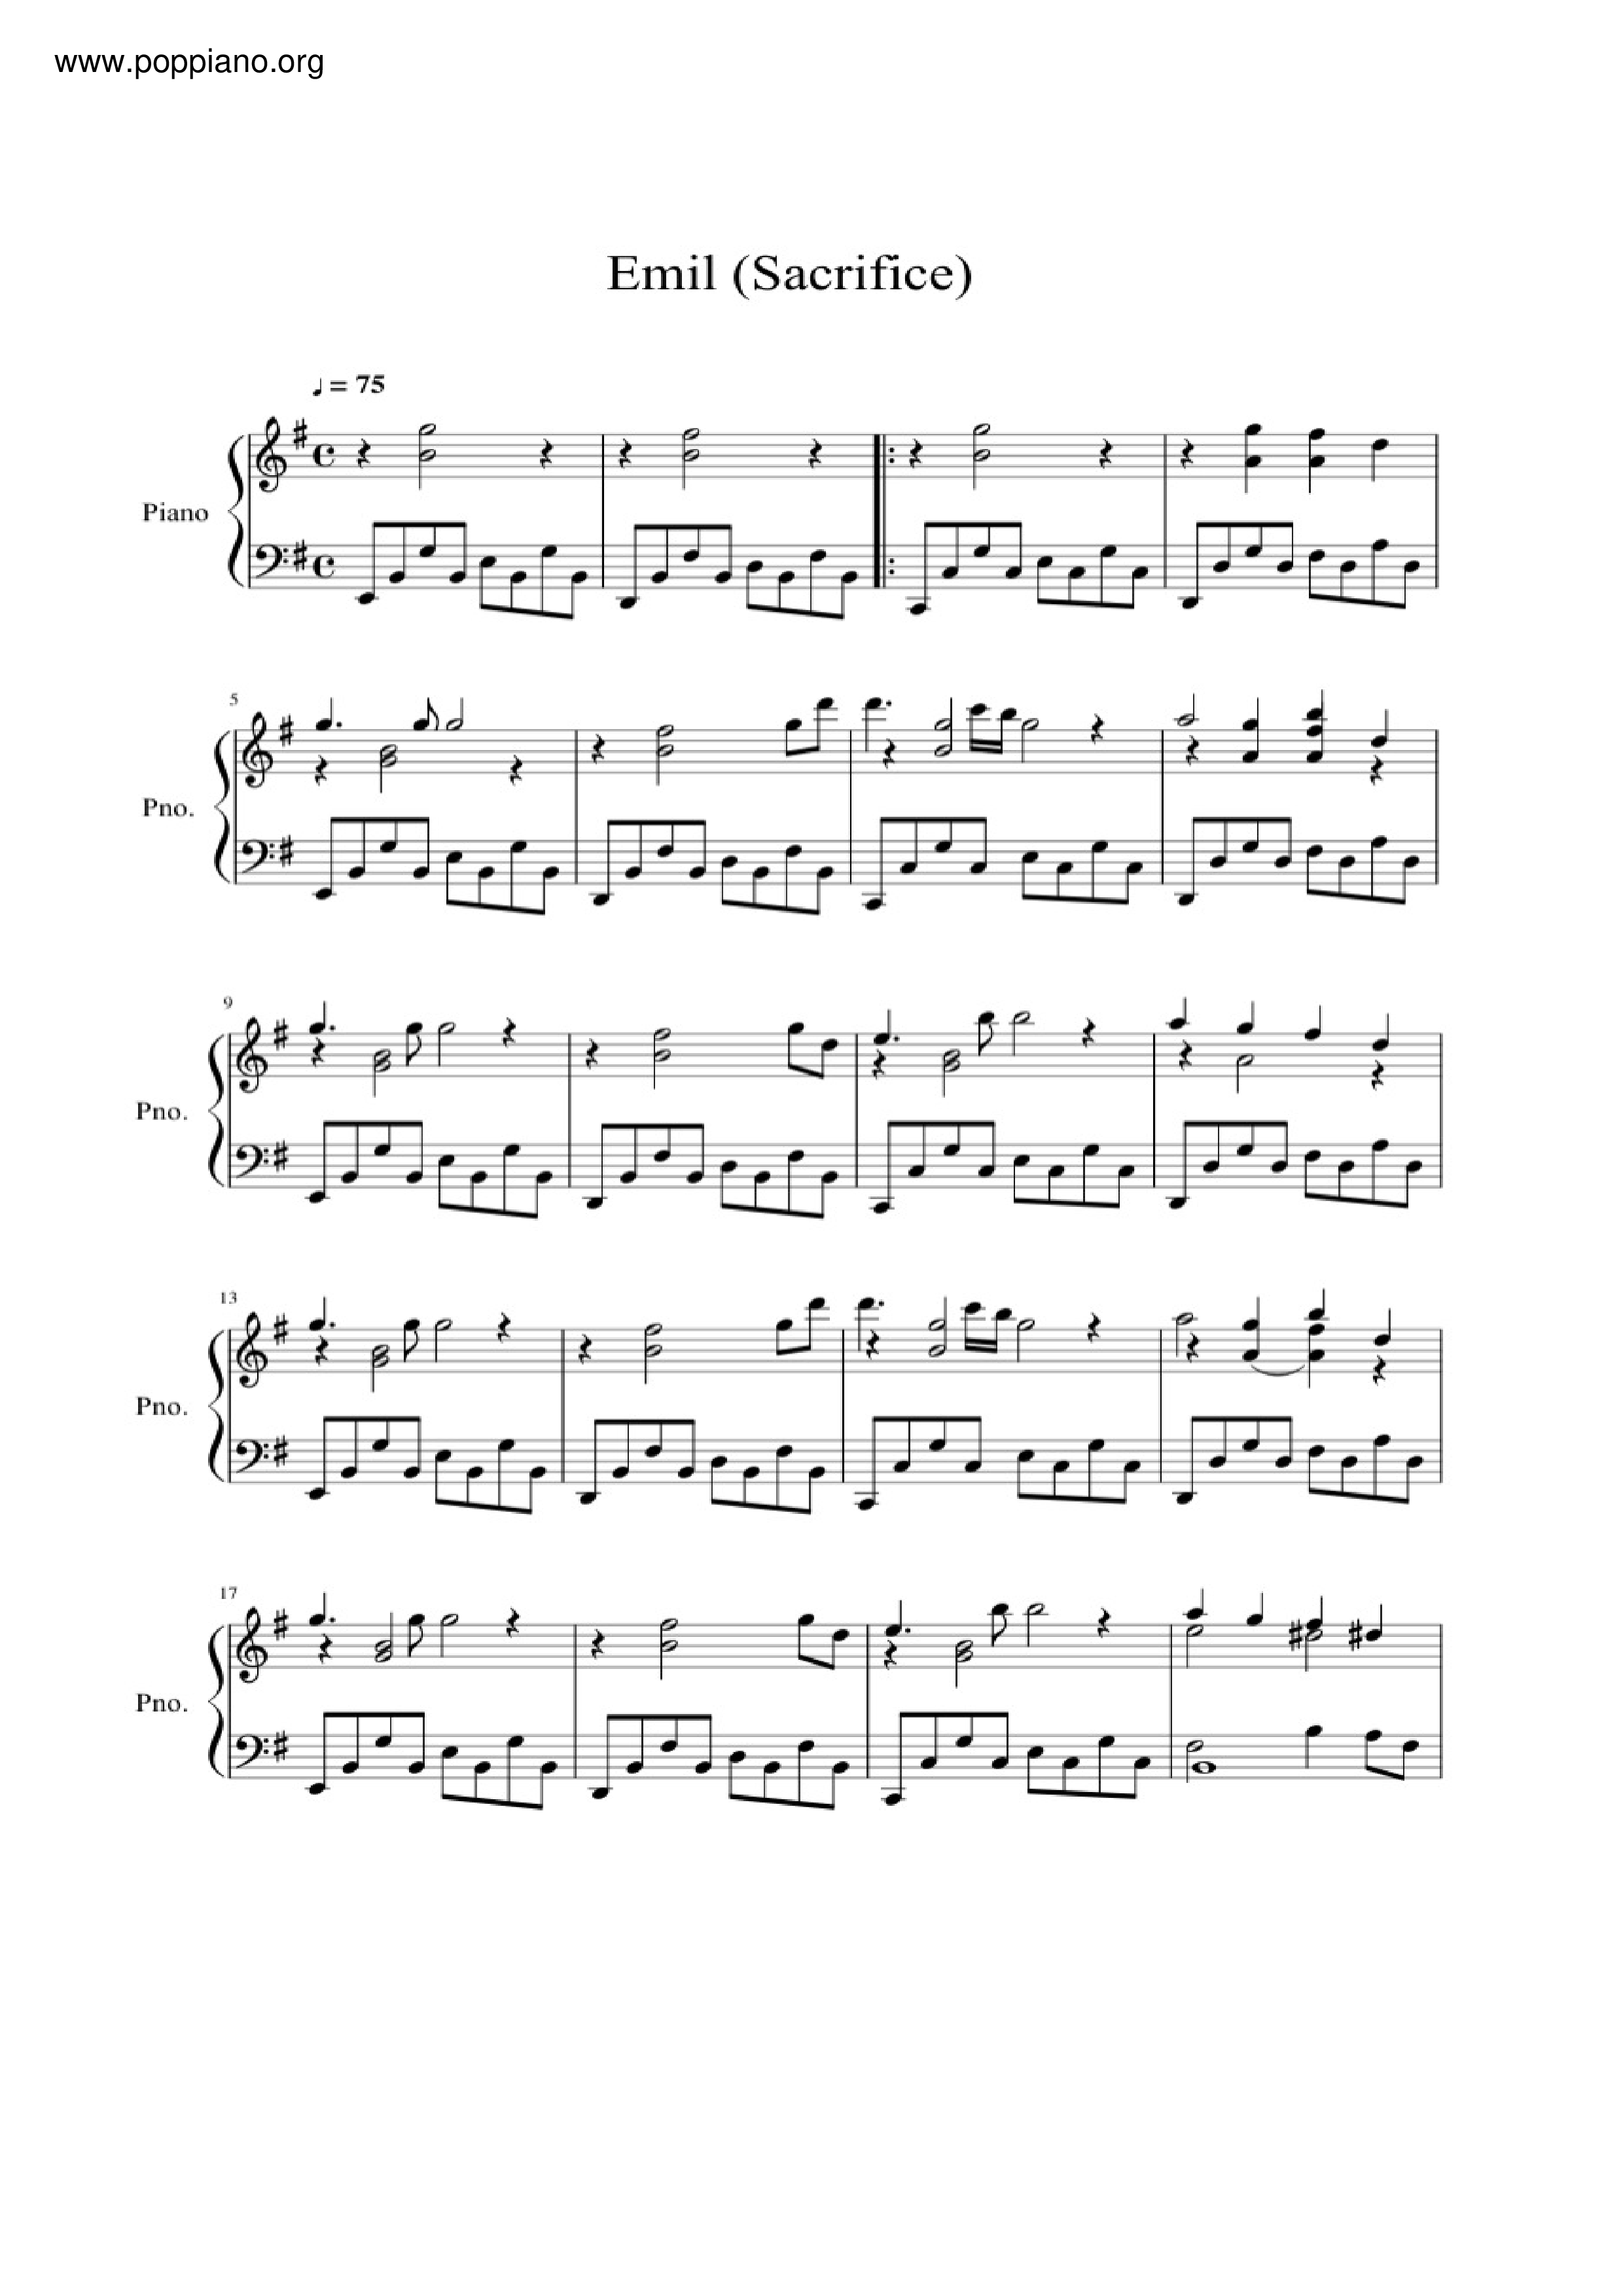 NieR: Automata - Emil Sacrifice Score